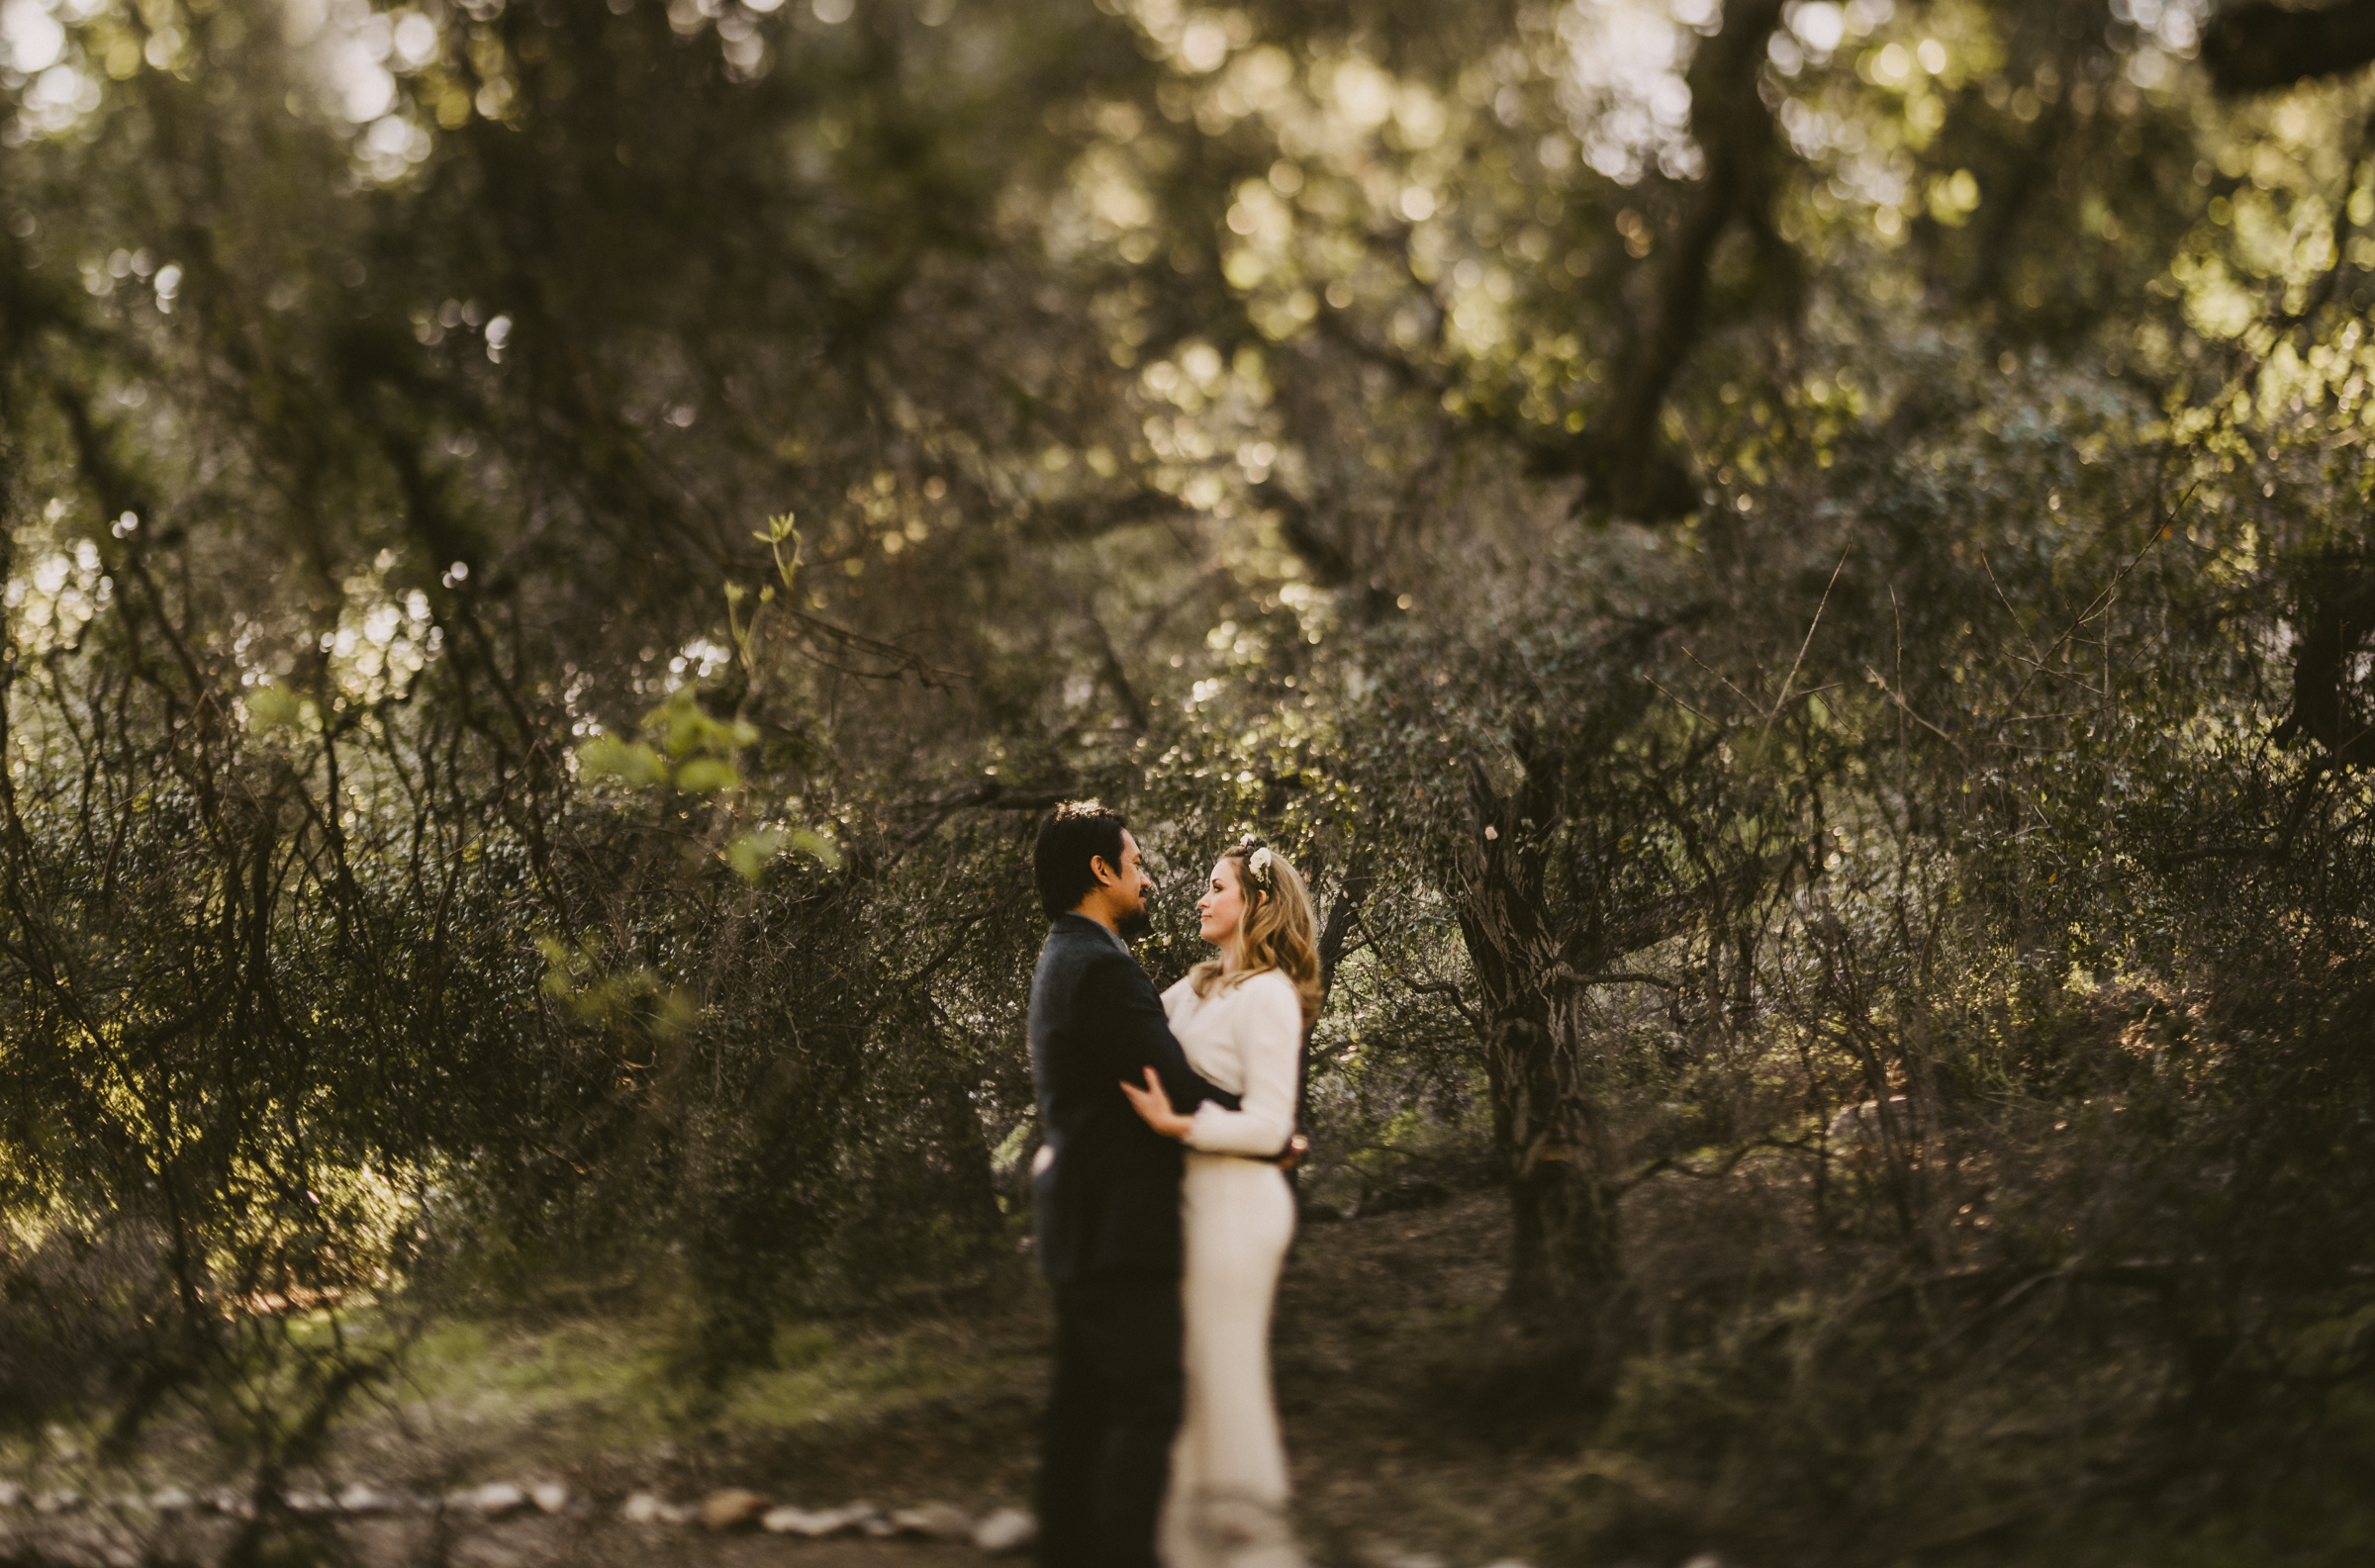 ©Isaiah + Taylor Photography - Intimate Elopement, Eaton Canyon, Los Angeles Wedding Photographer-20.jpg